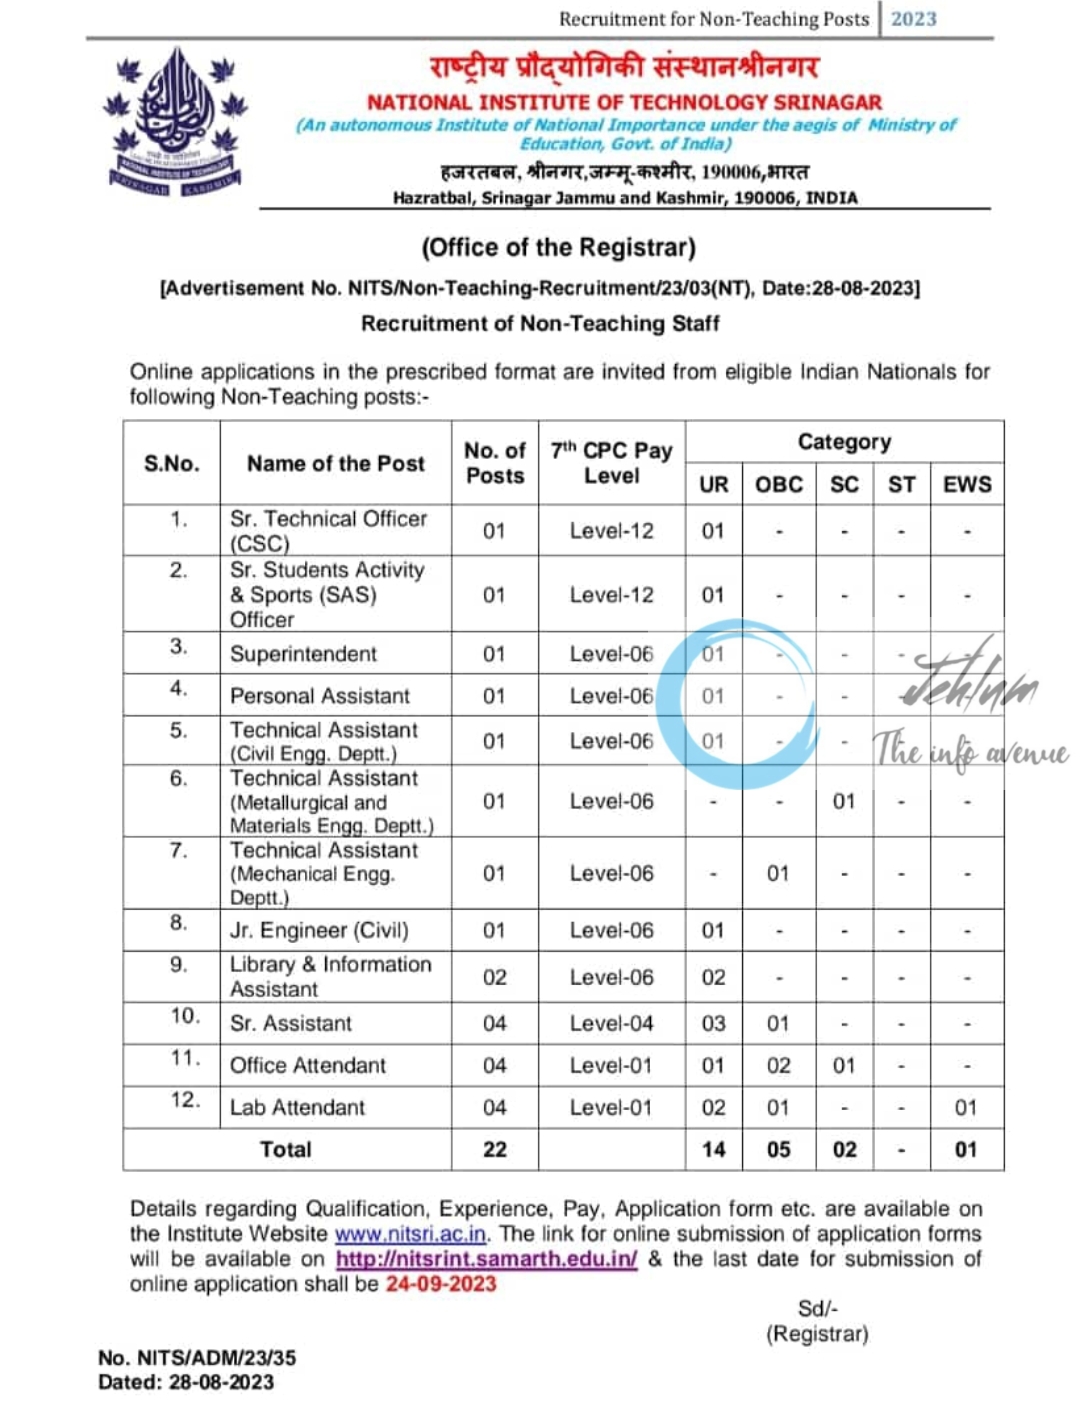 NIT SRINAGAR Recruitment Notification for Non-Teaching Posts 2023